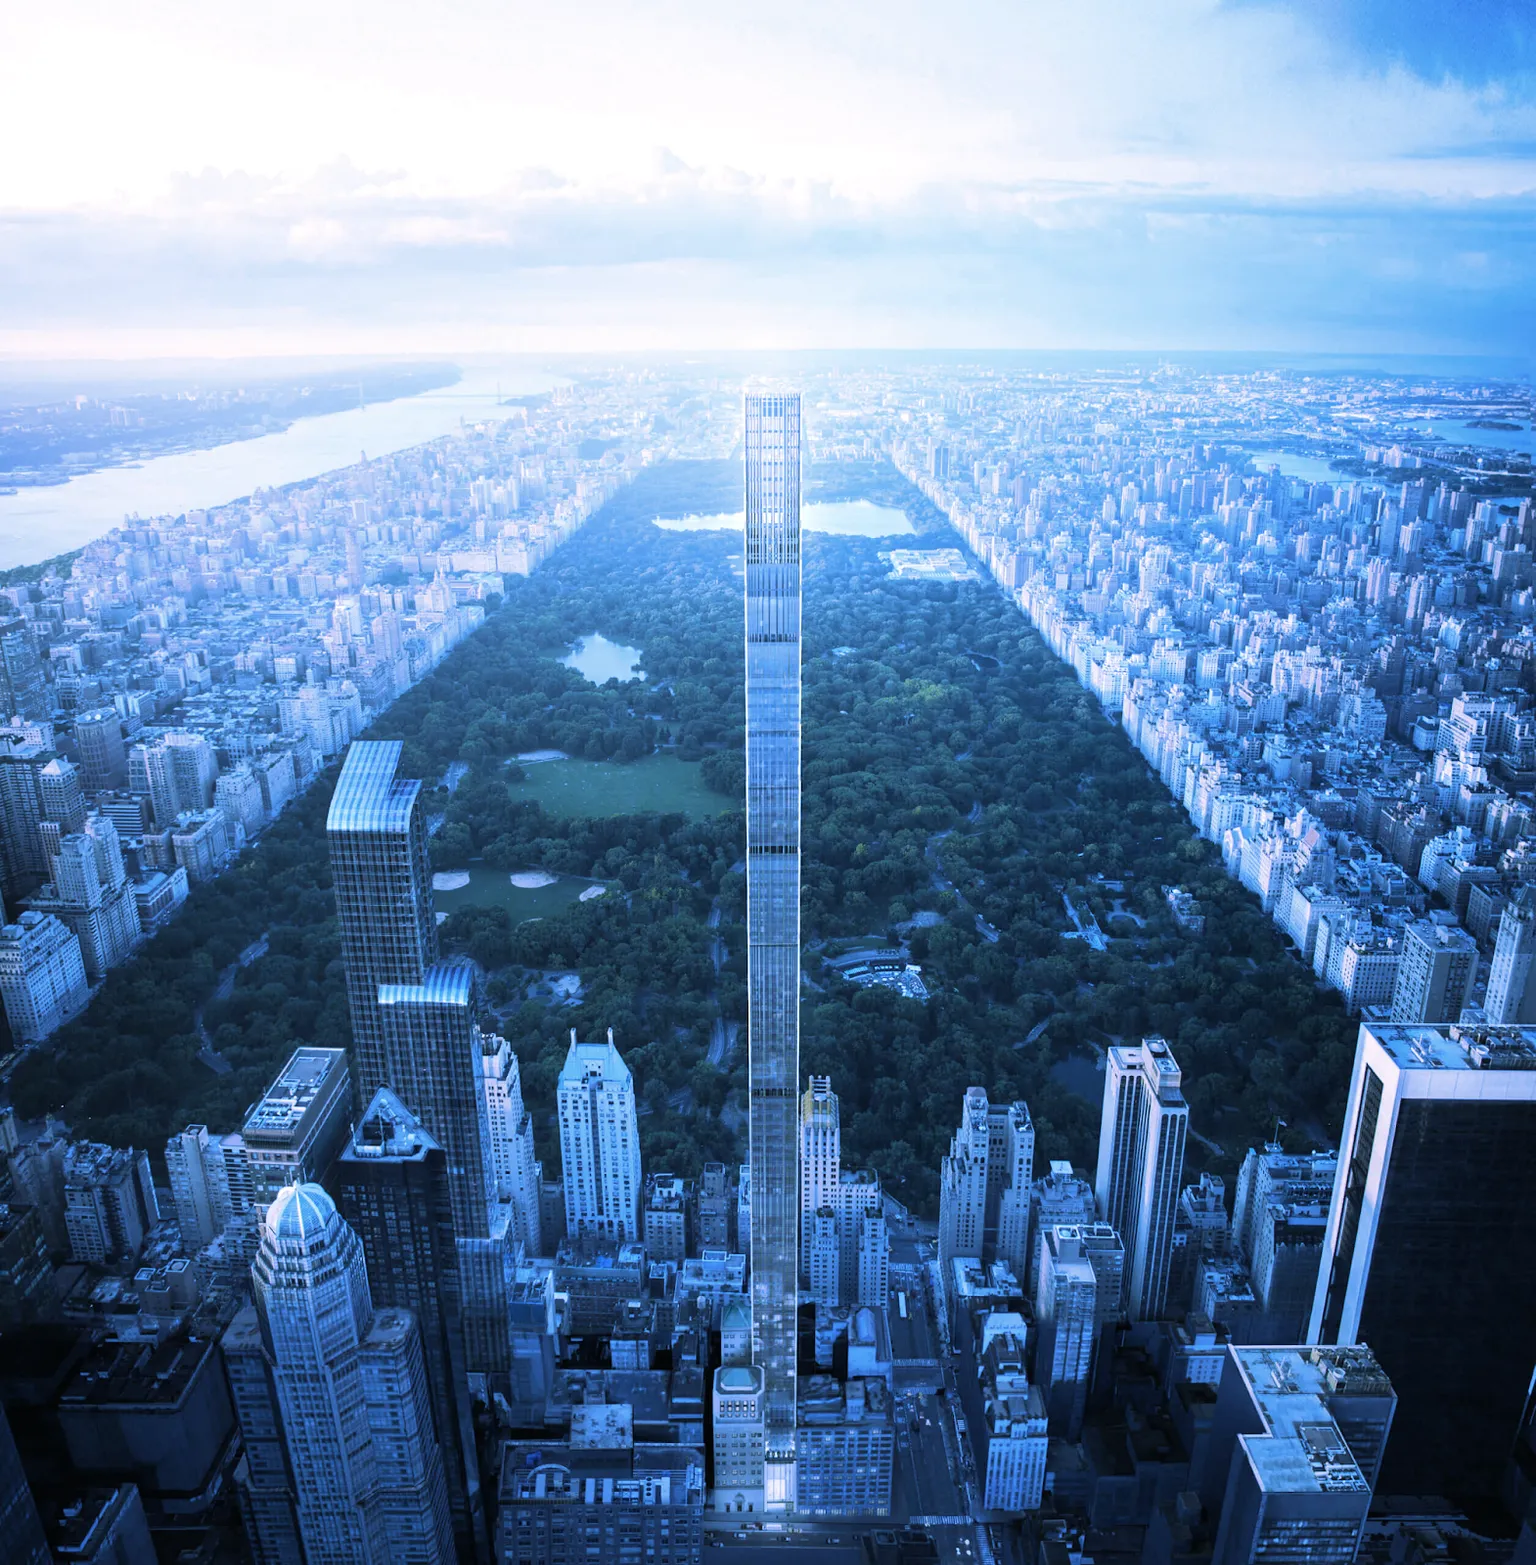 New York City skyline over Central Park. Image: JDS Development